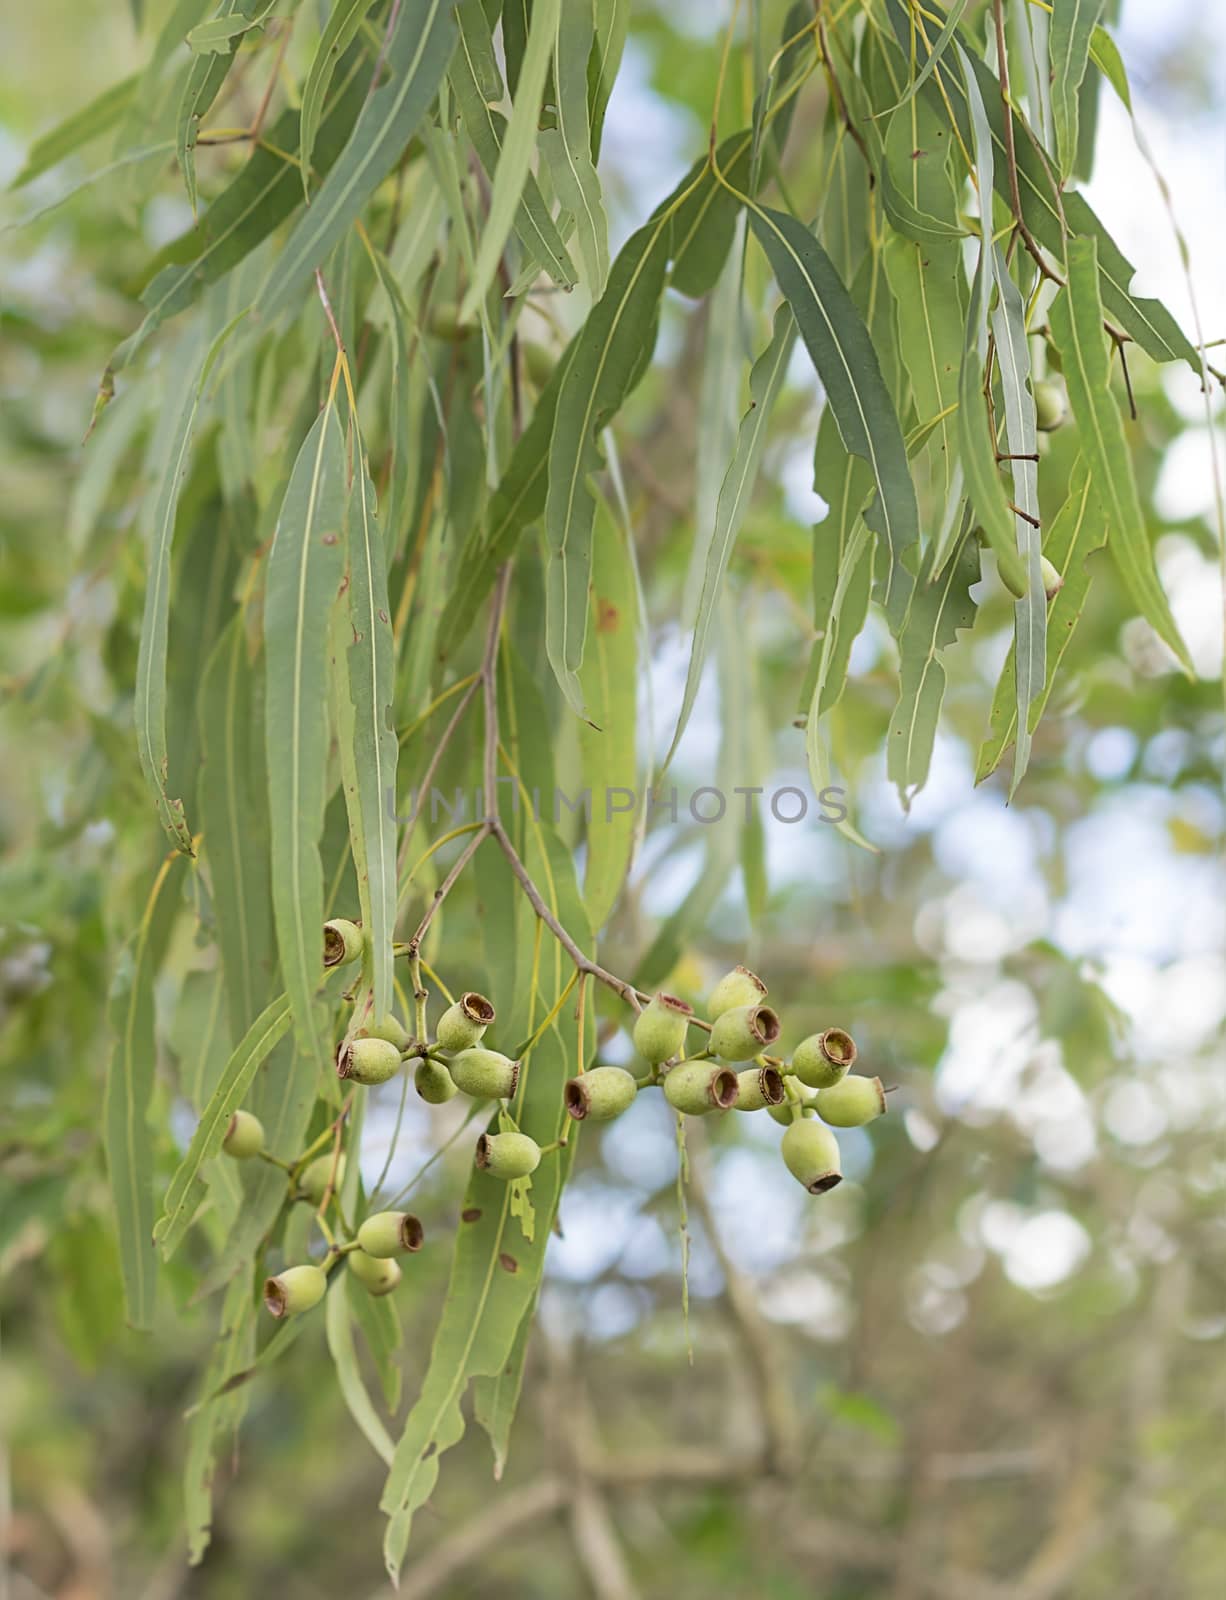 Iconic Australian eucalyptus tree koala food with green gum leaves and gumnuts for an Australiana background